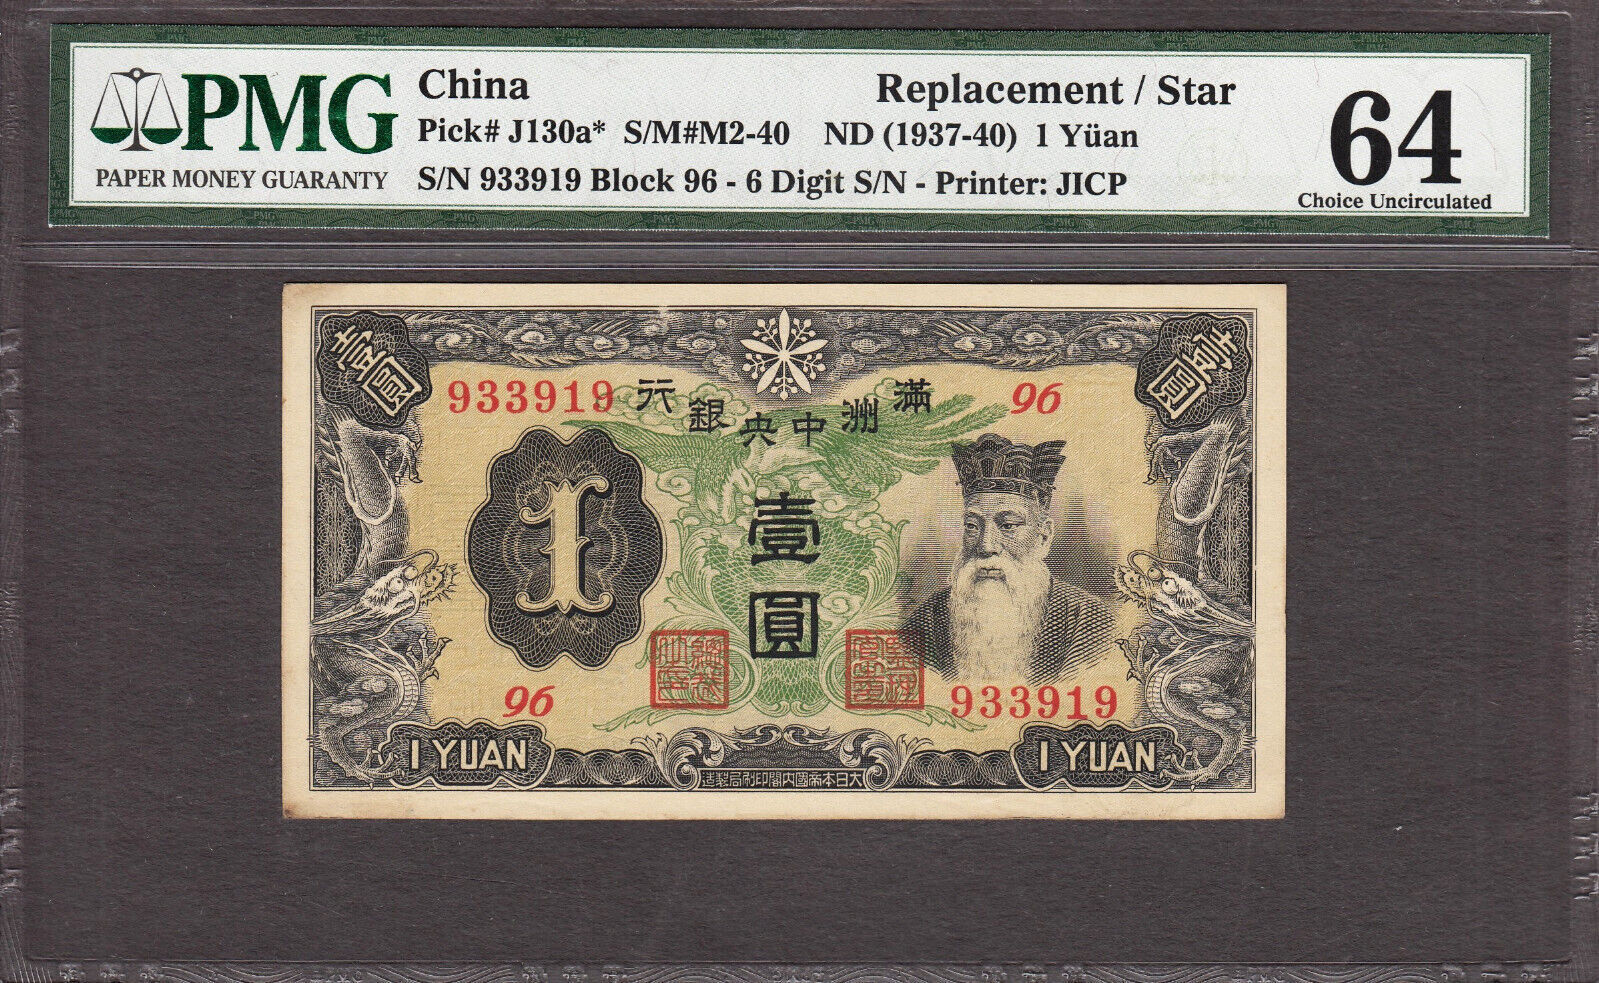 China One Yuan ND 1937-40 REPLACEMENT 933919 Block 96 Pick-J130a 